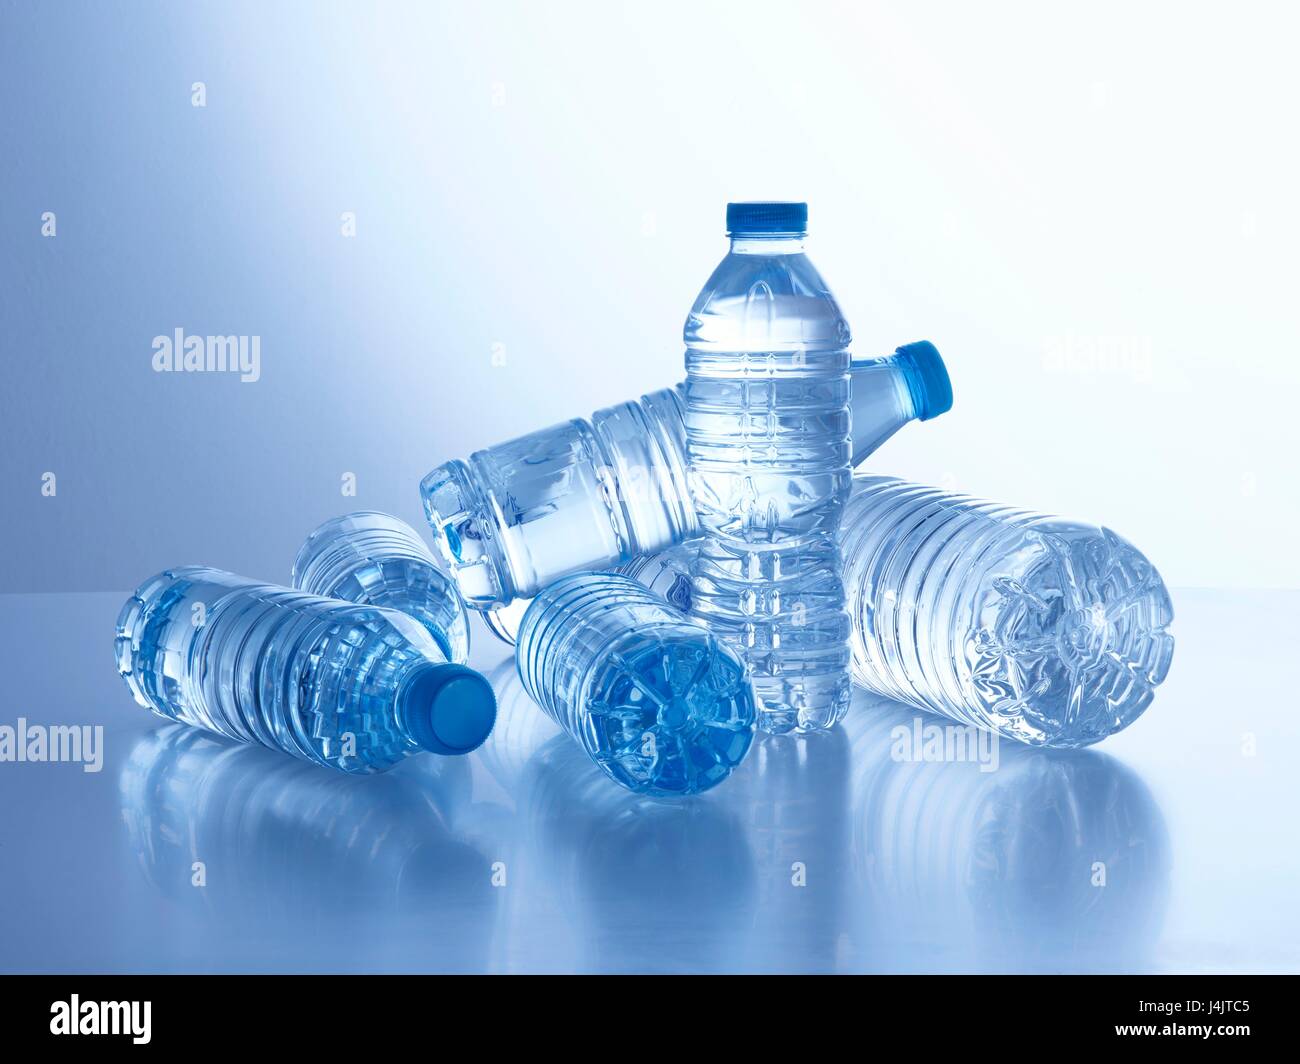 Botellas de agua mineral, Foto de estudio. Foto de stock